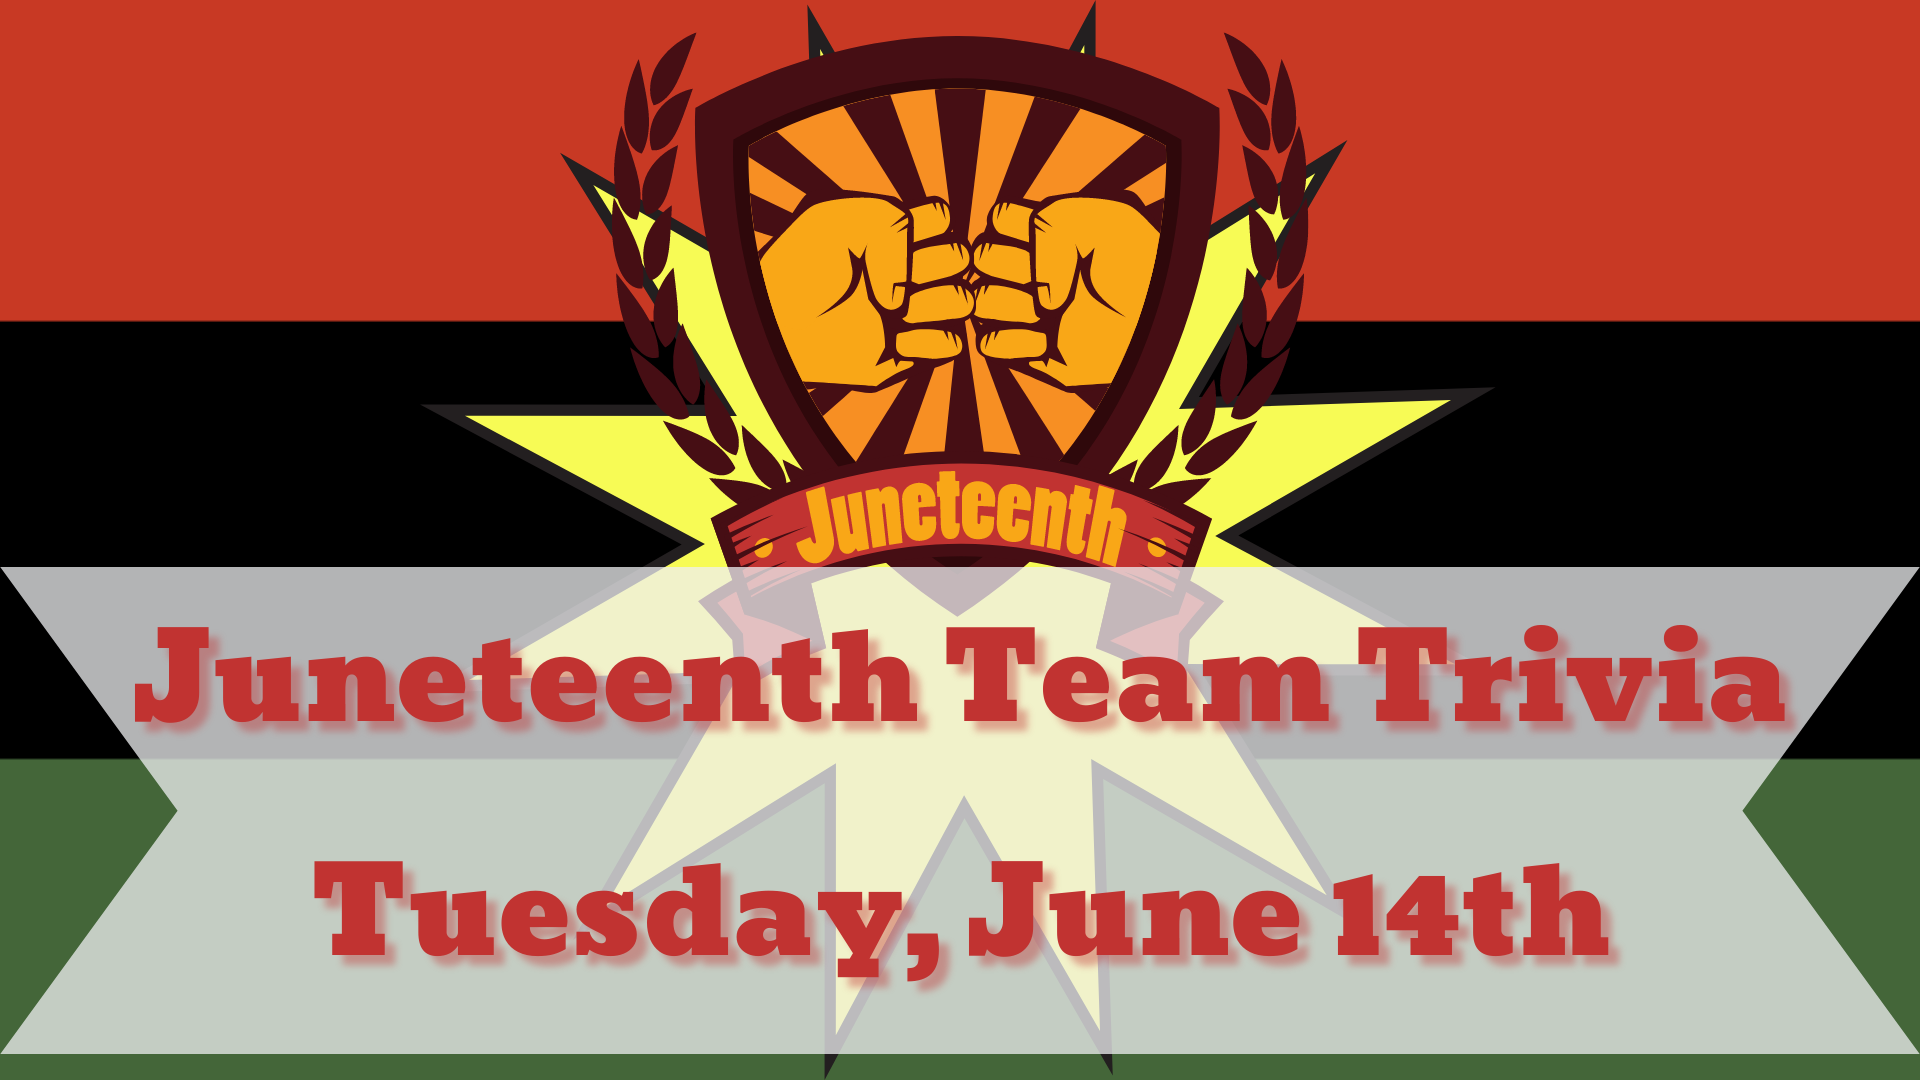 Juneteenth Team Trivia, Tuesday, June 14th